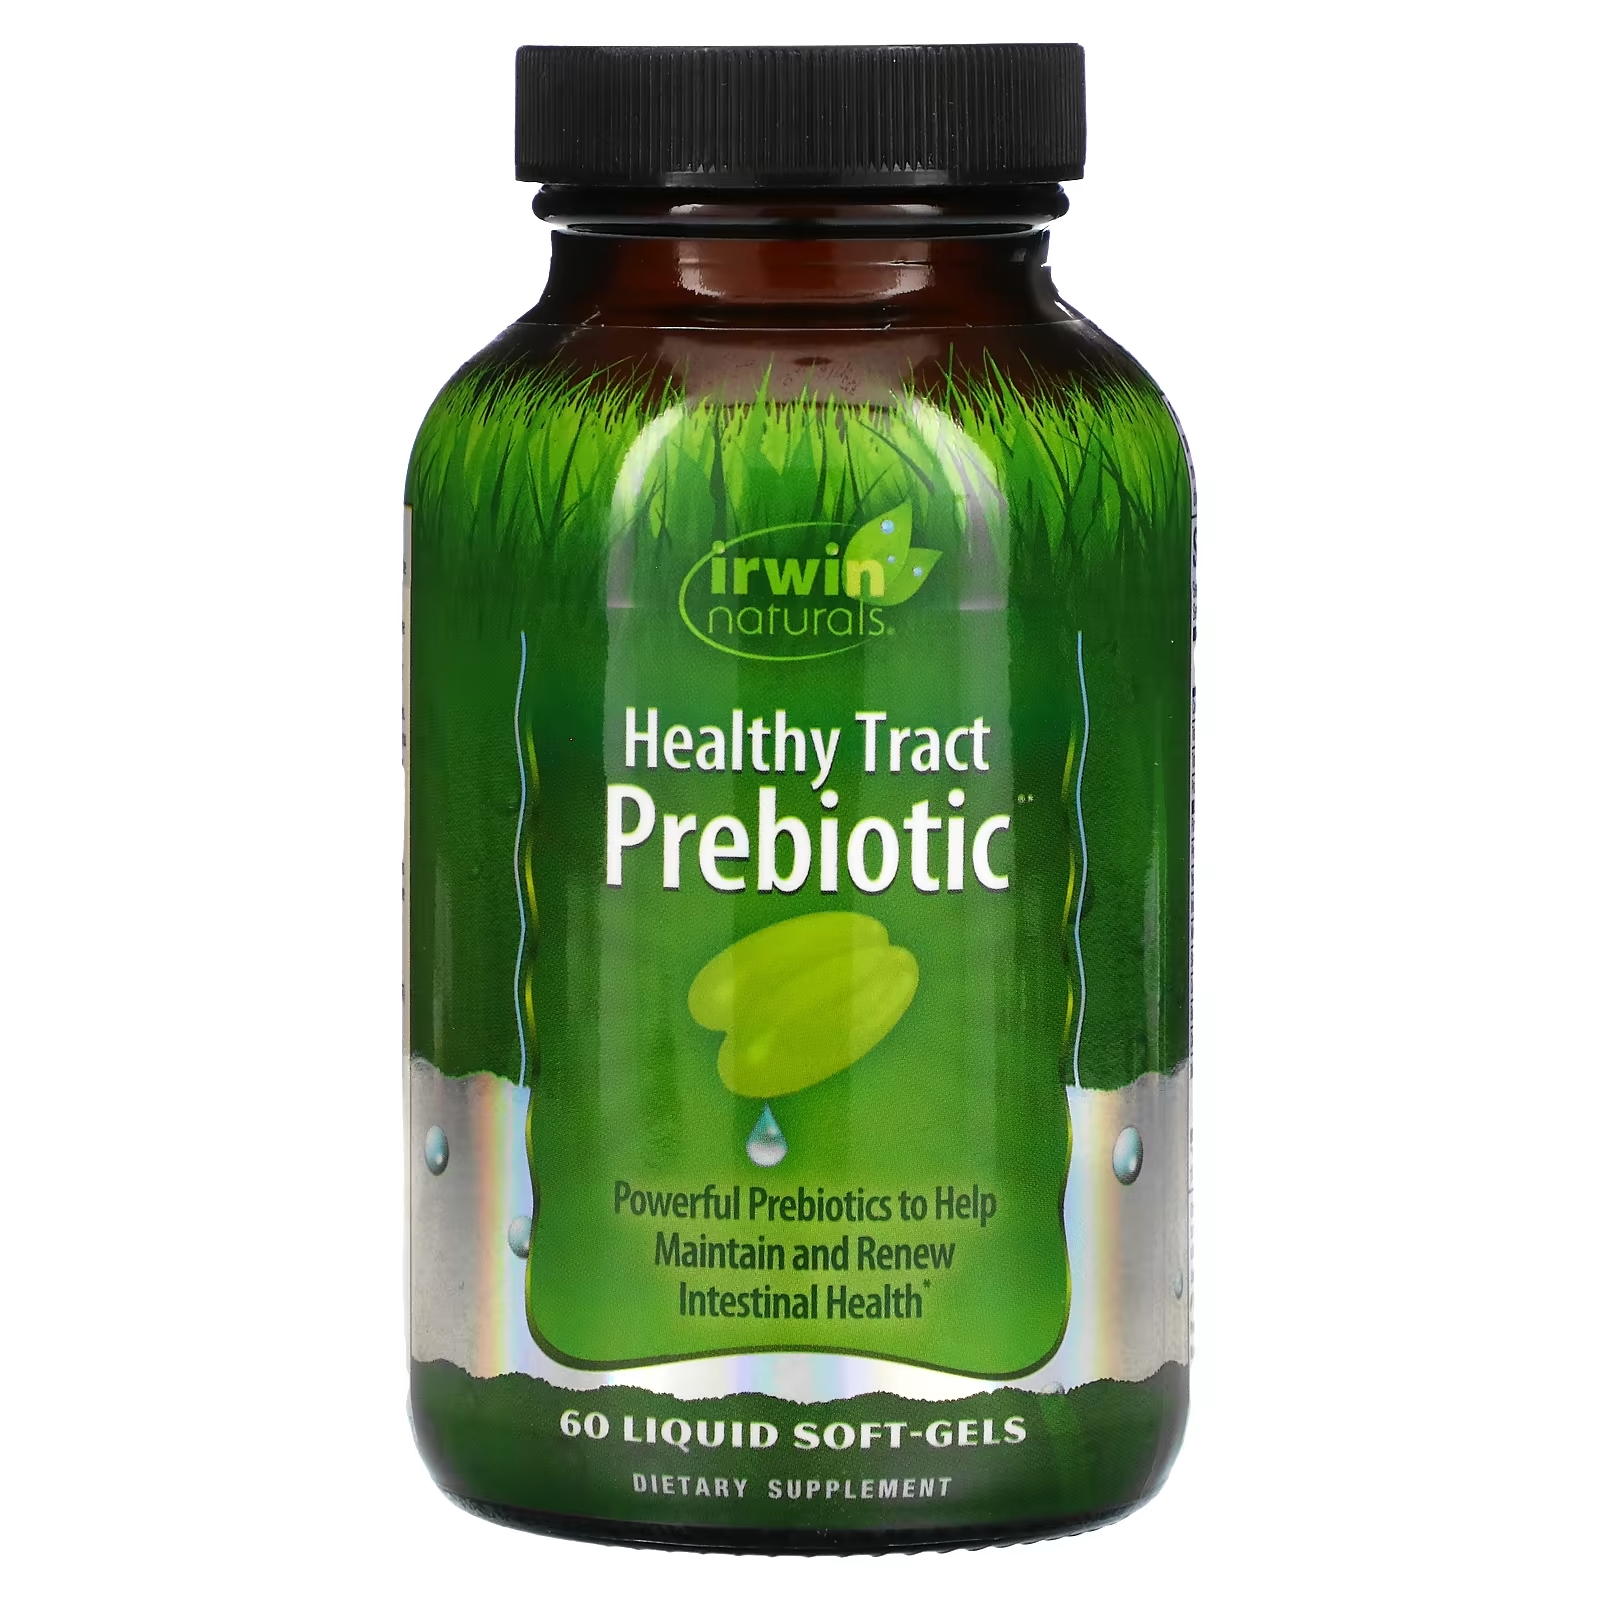 Irwin Naturals Healthy Tract Prebiotic пребиотик для здоровья кишечника, 60 капсул irwin naturals healthy tract prebiotic пребиотик для здоровья кишечника 60 капсул с жидкостью